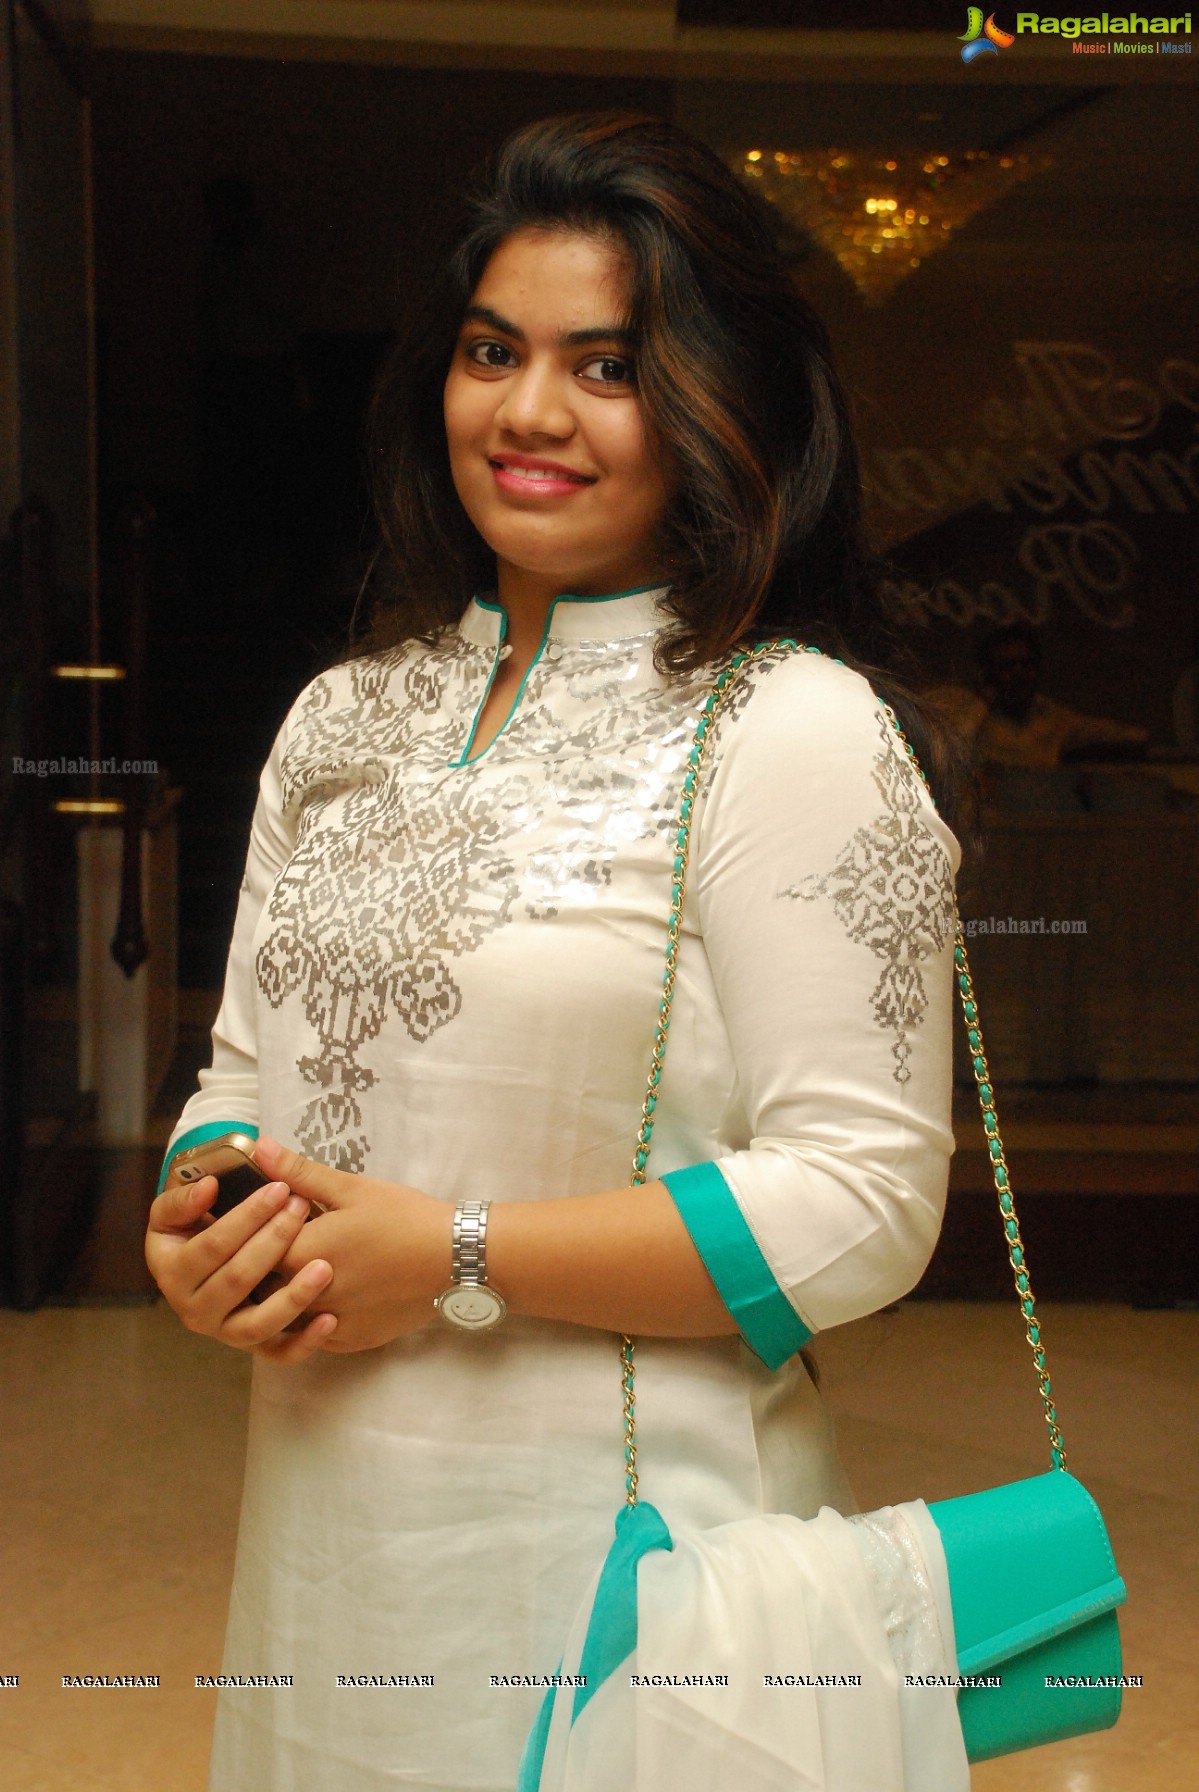 Melange Lifestyle Exhibition at Taj Krishna, Hyderabad (Nov. 2014)